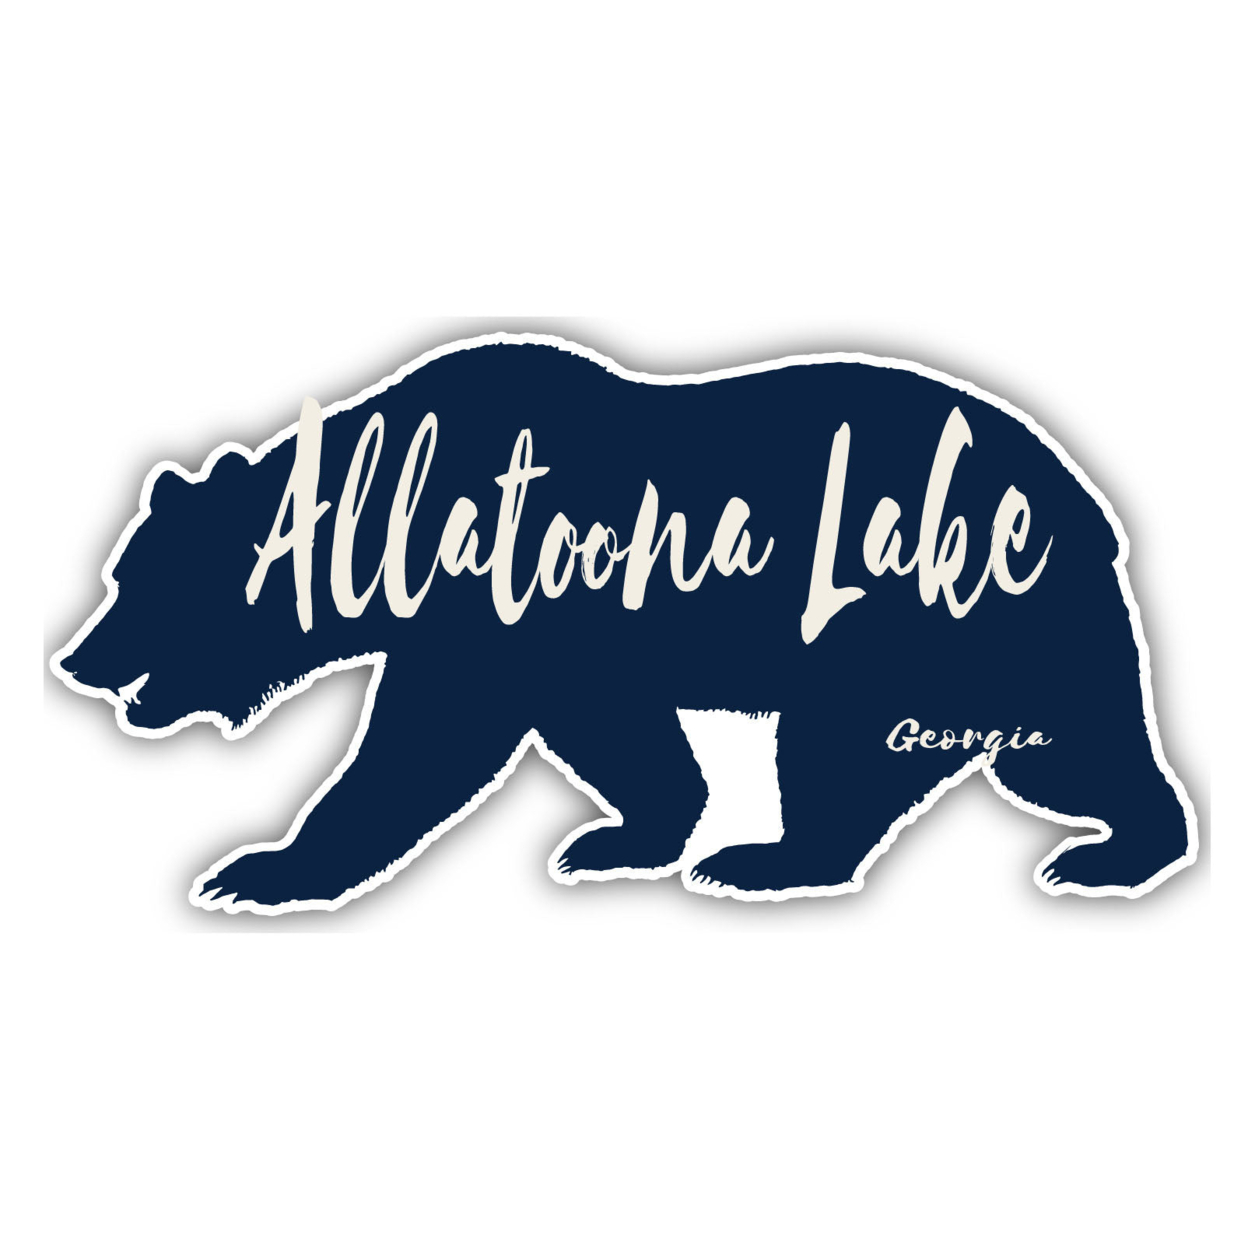 Allatoona Lake Georgia Souvenir Decorative Stickers (Choose Theme And Size) - Single Unit, 4-Inch, Tent